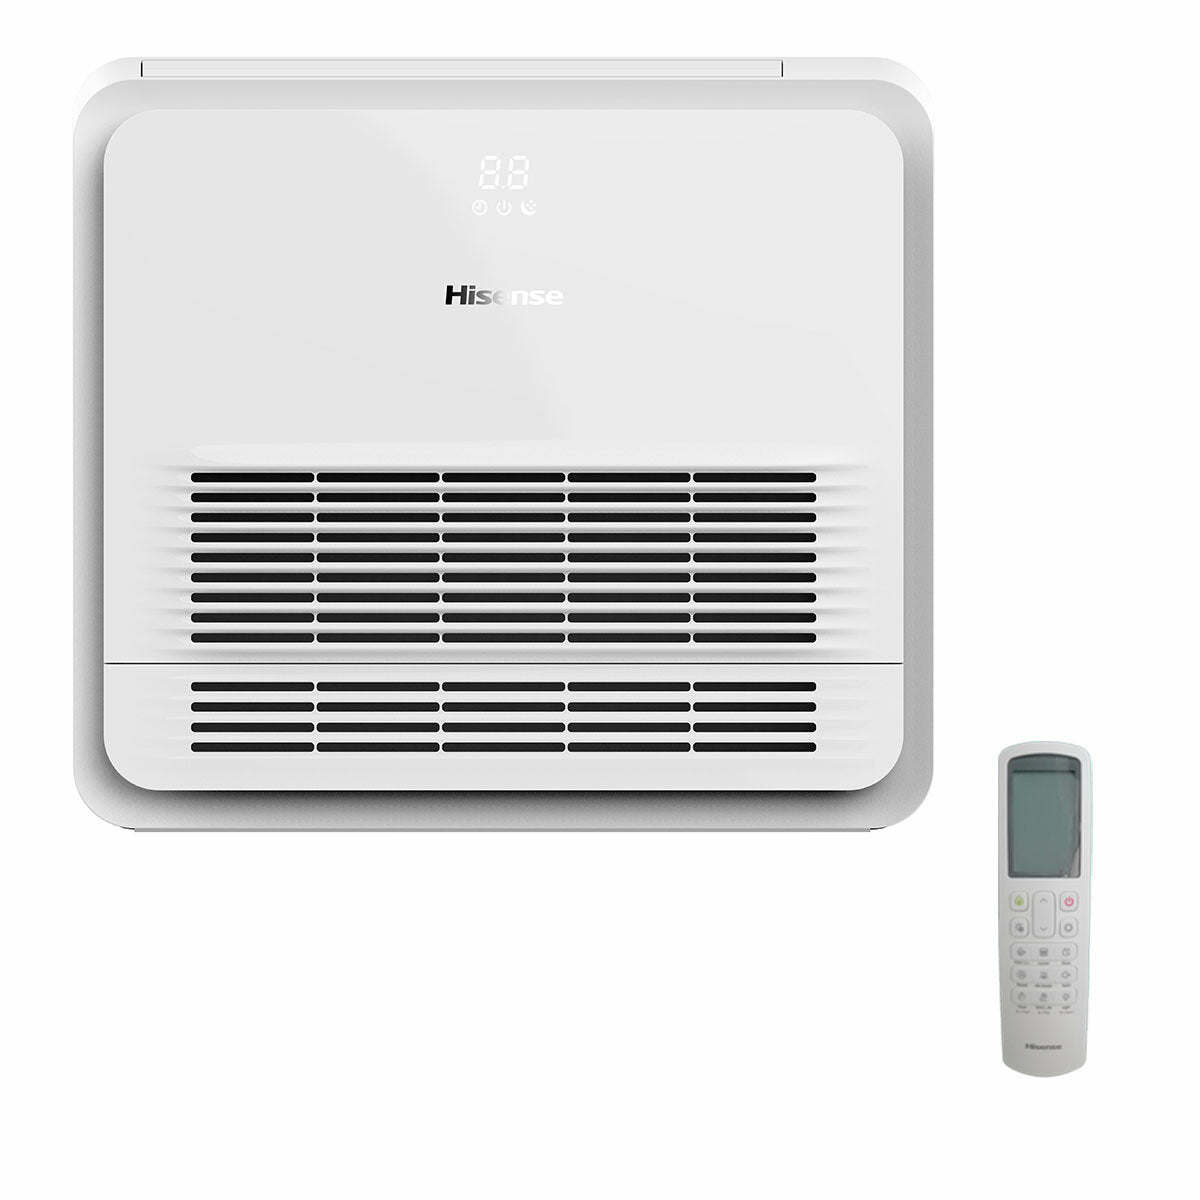 Hisense Console AKT dual split air conditioner 12000+12000 BTU inverter A++ outdoor unit 5 kW